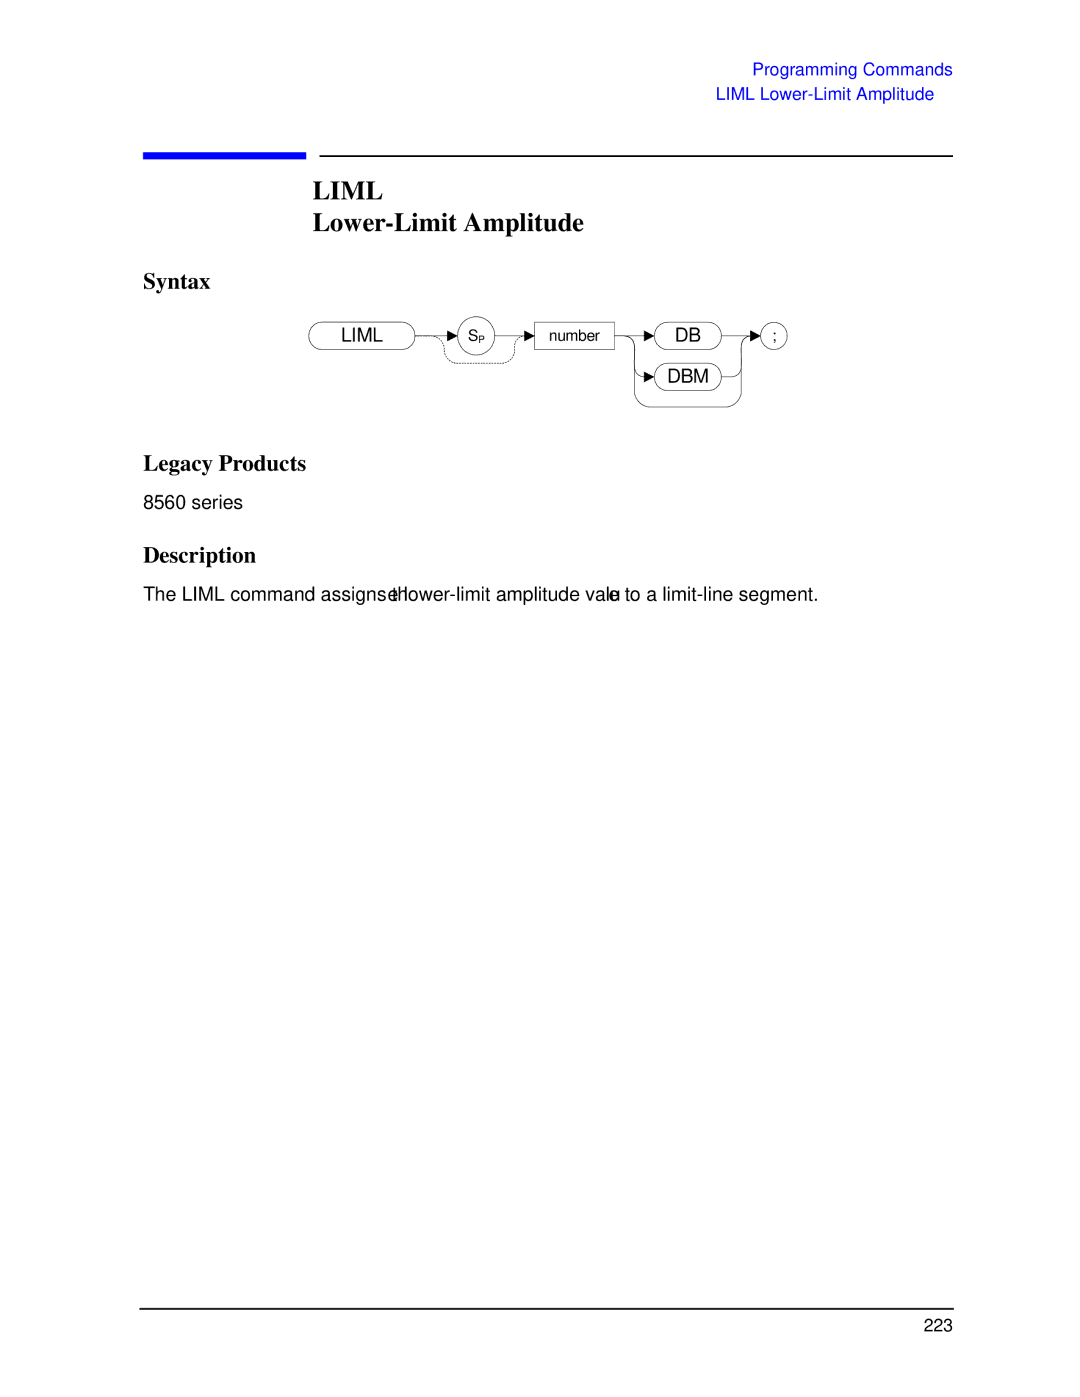 Agilent Technologies N9030a manual Liml, Lower-Limit Amplitude 